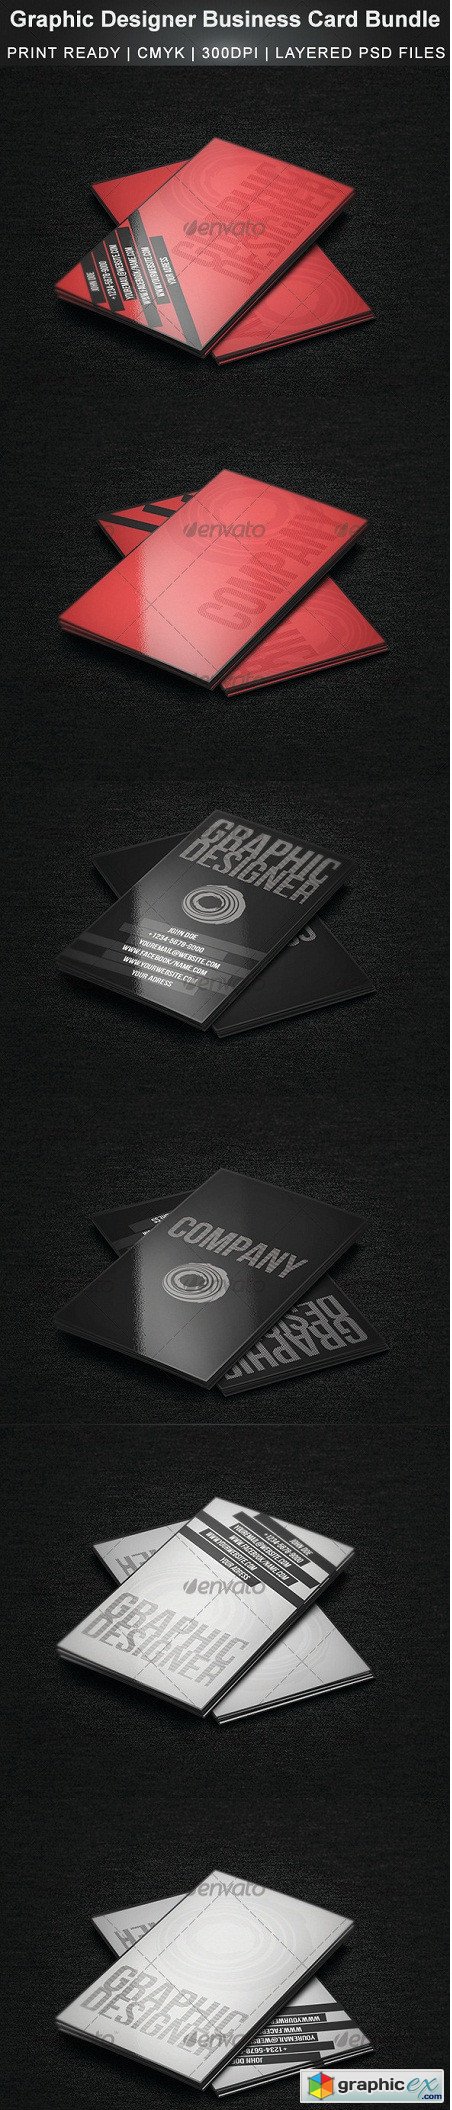 Graphic Designer Business Card Bundle